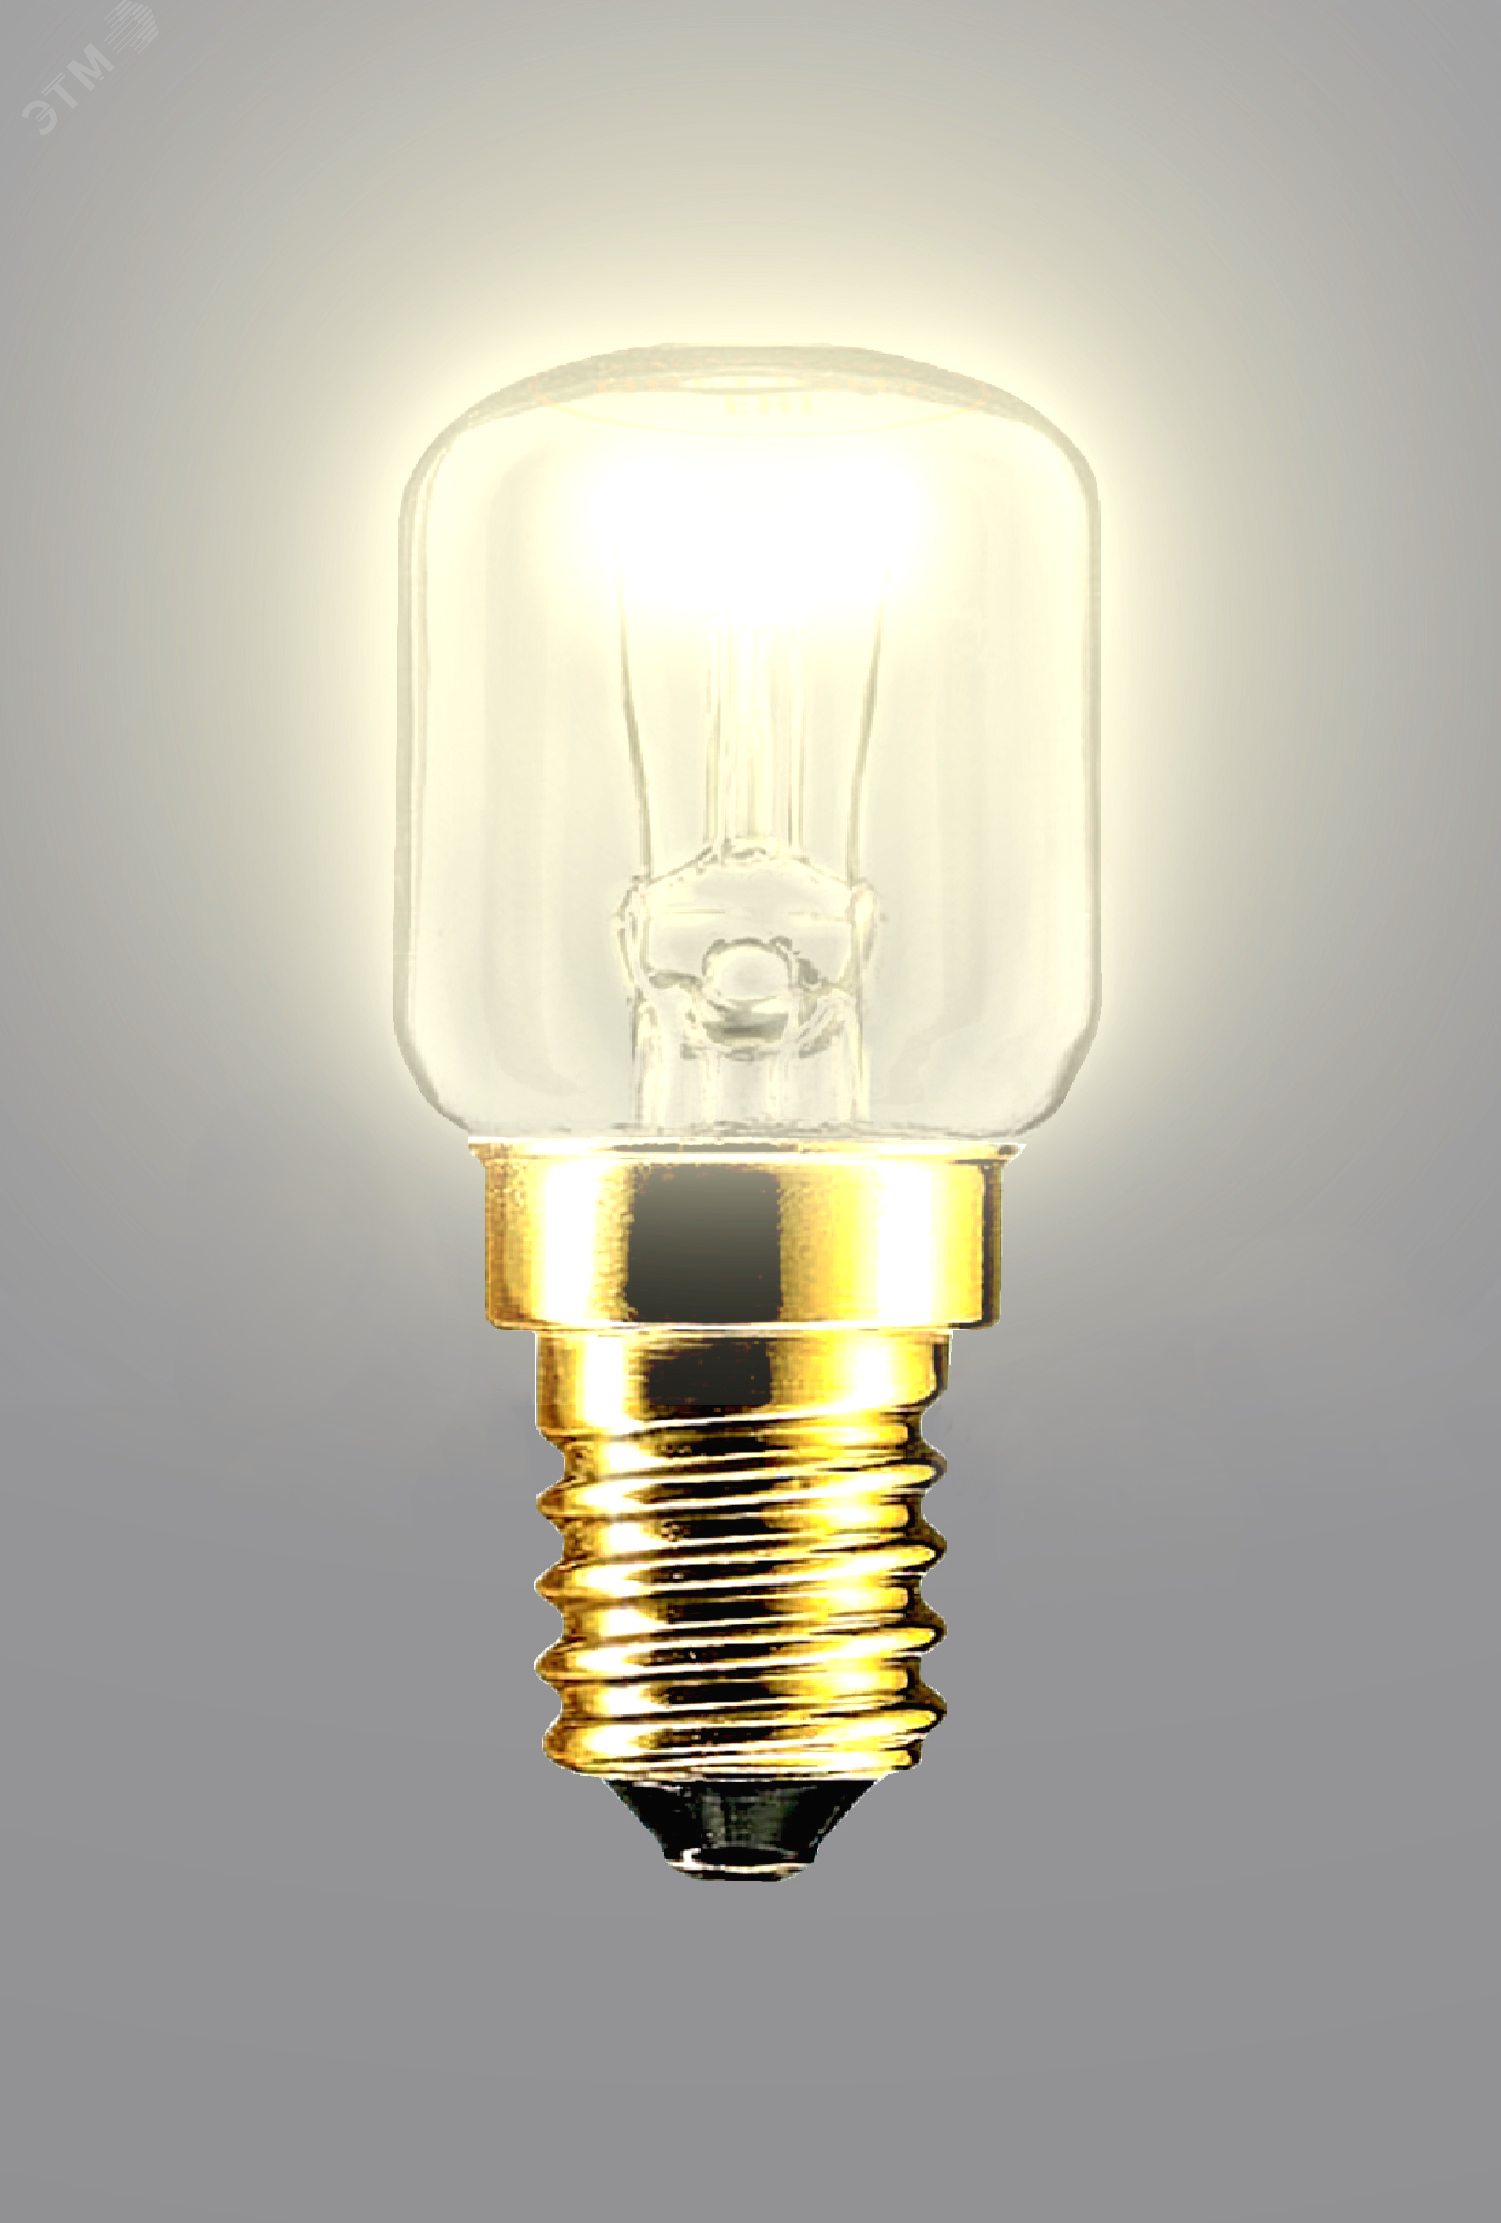 Лампа накаливания РН 15вт 230в Е14 BL для дух.шкафа 85637130 BELLIGHT - превью 2